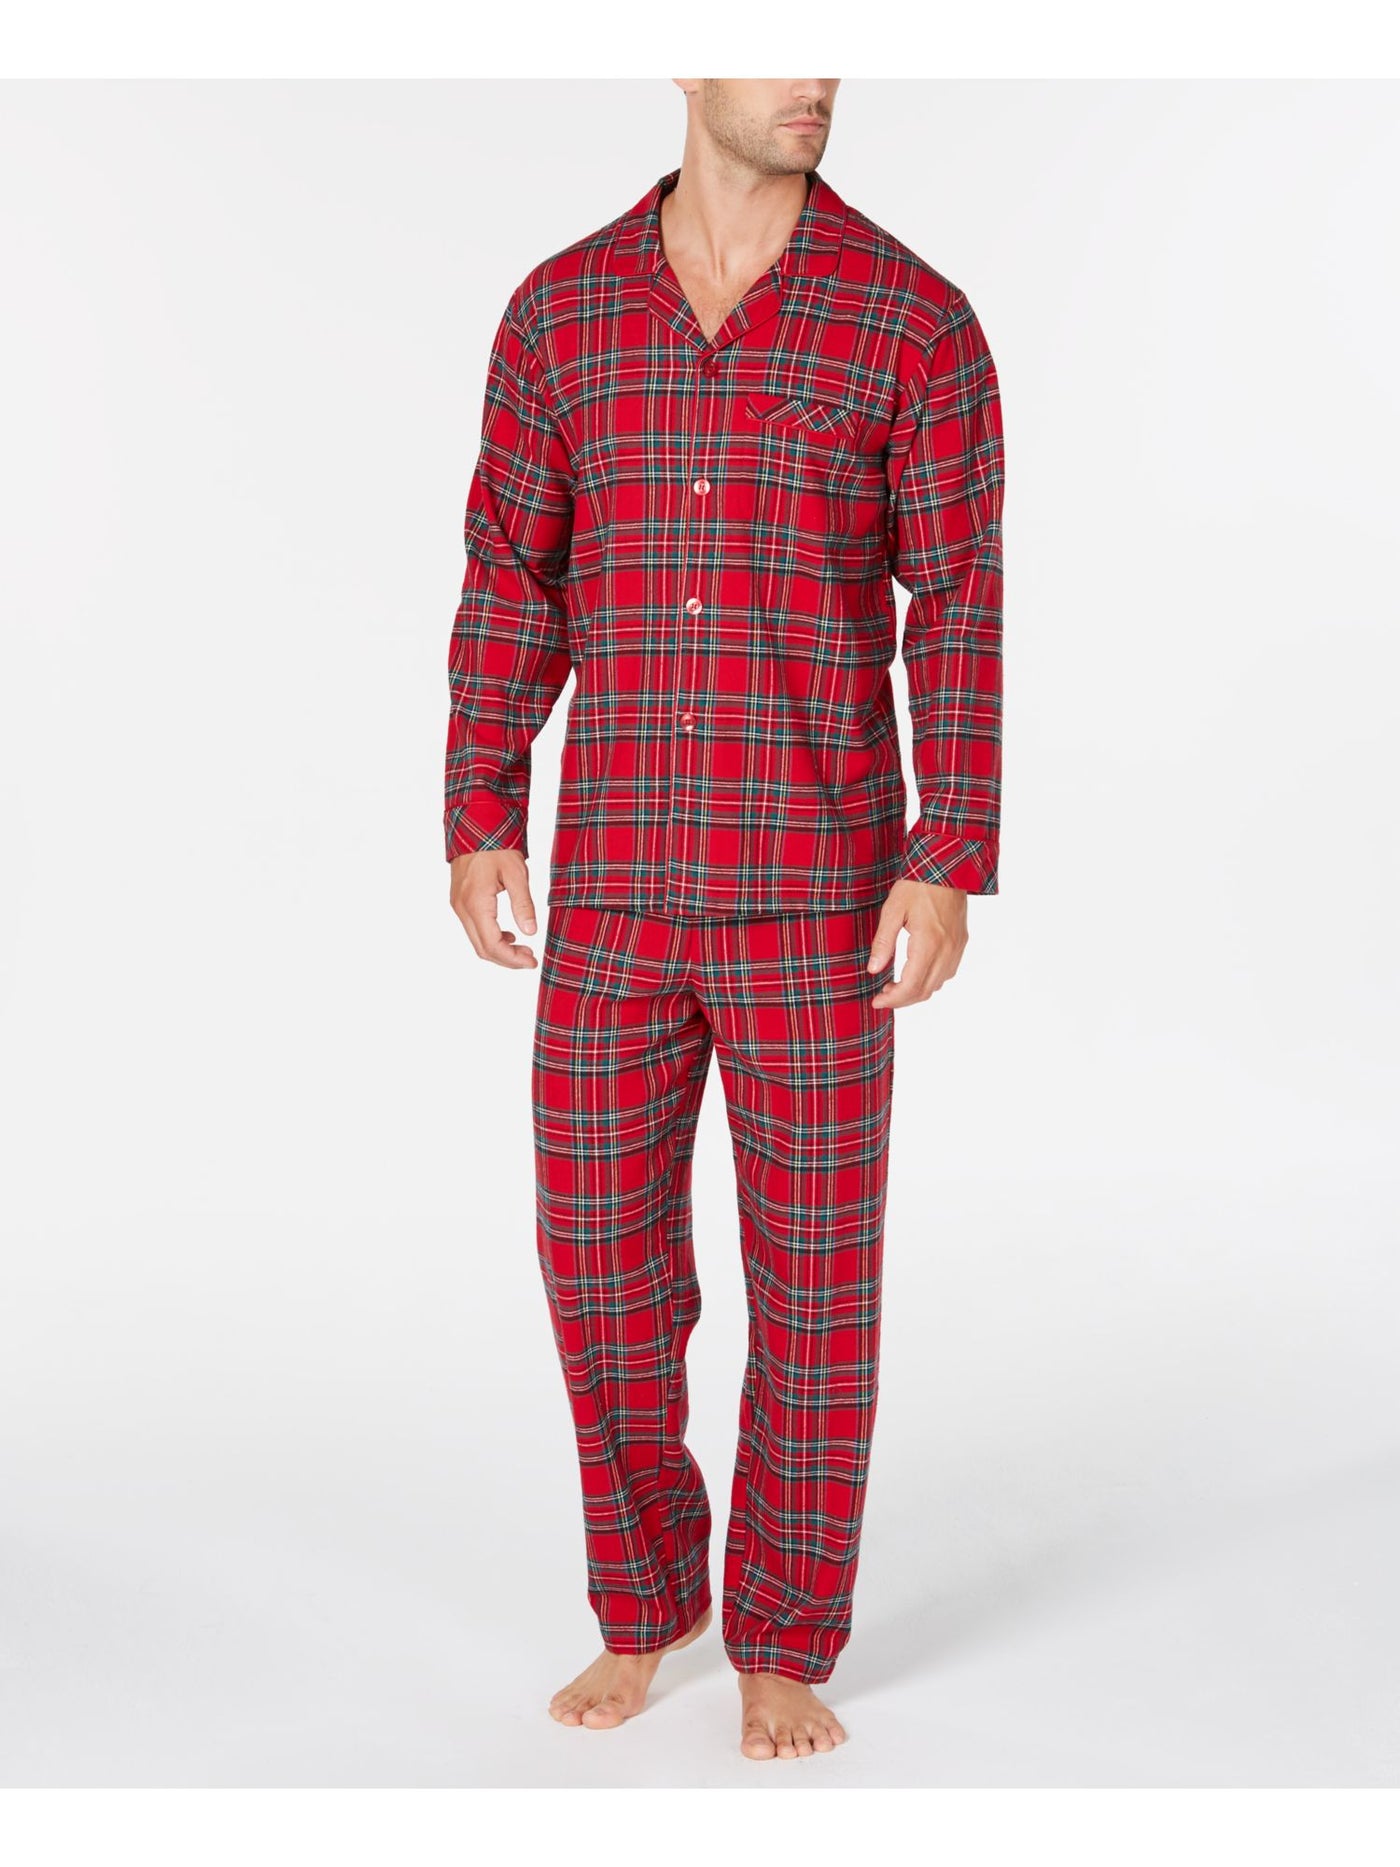 FAMILY PJs Intimates Red Pocketed Holiday Sleep Shirt Pajama Top S